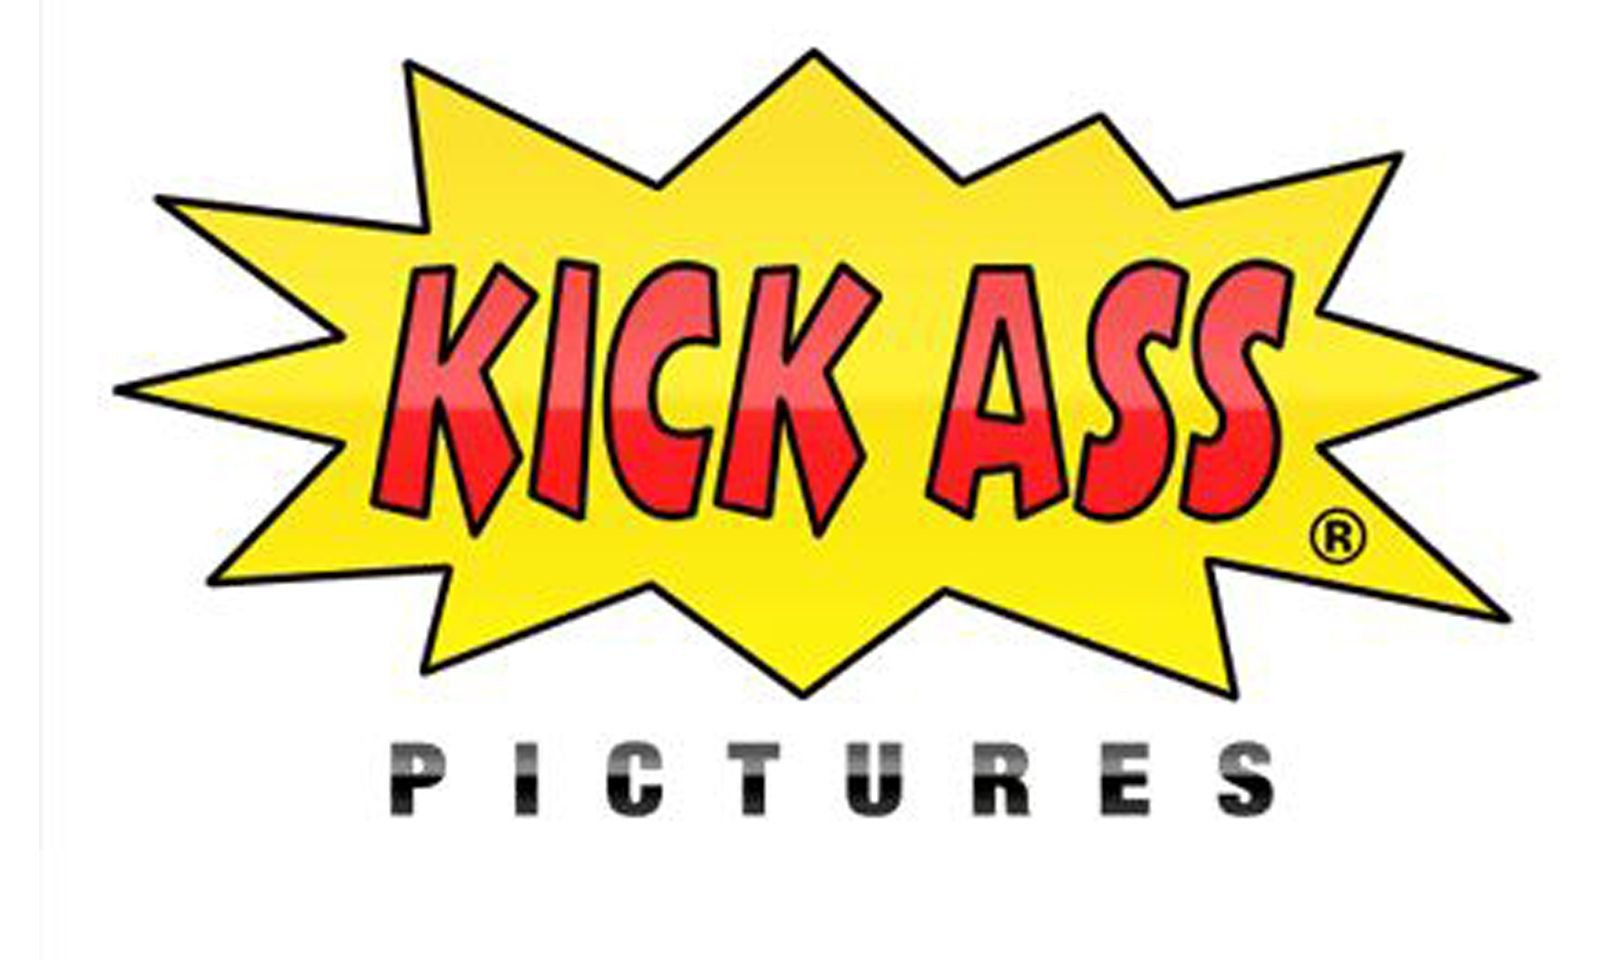 Kick Ass Pictures to Release ‘Black Bi Cuckolding 30’